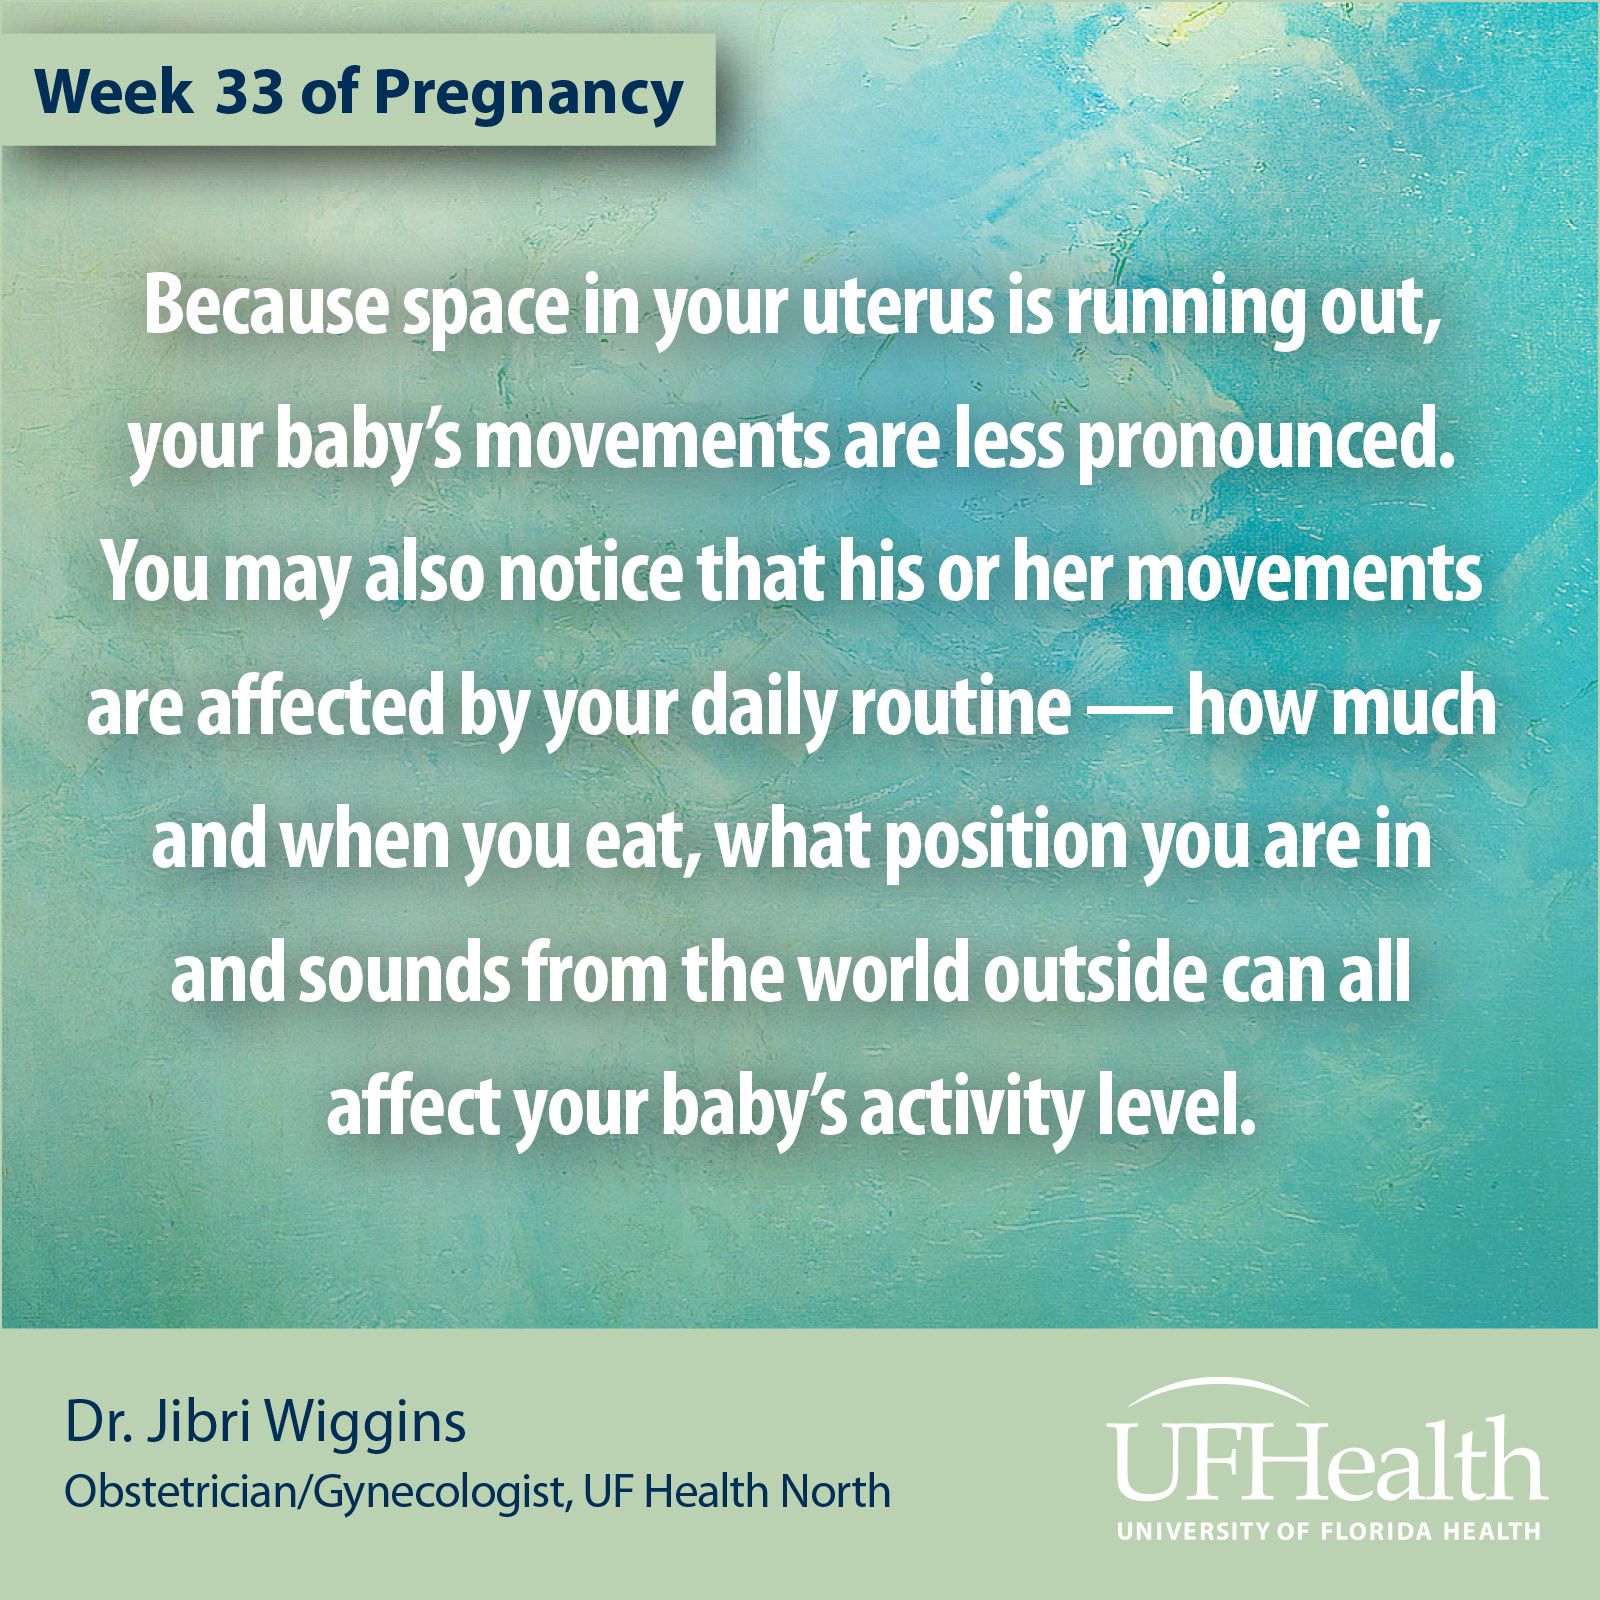 UF Health North pregnancy tip 33